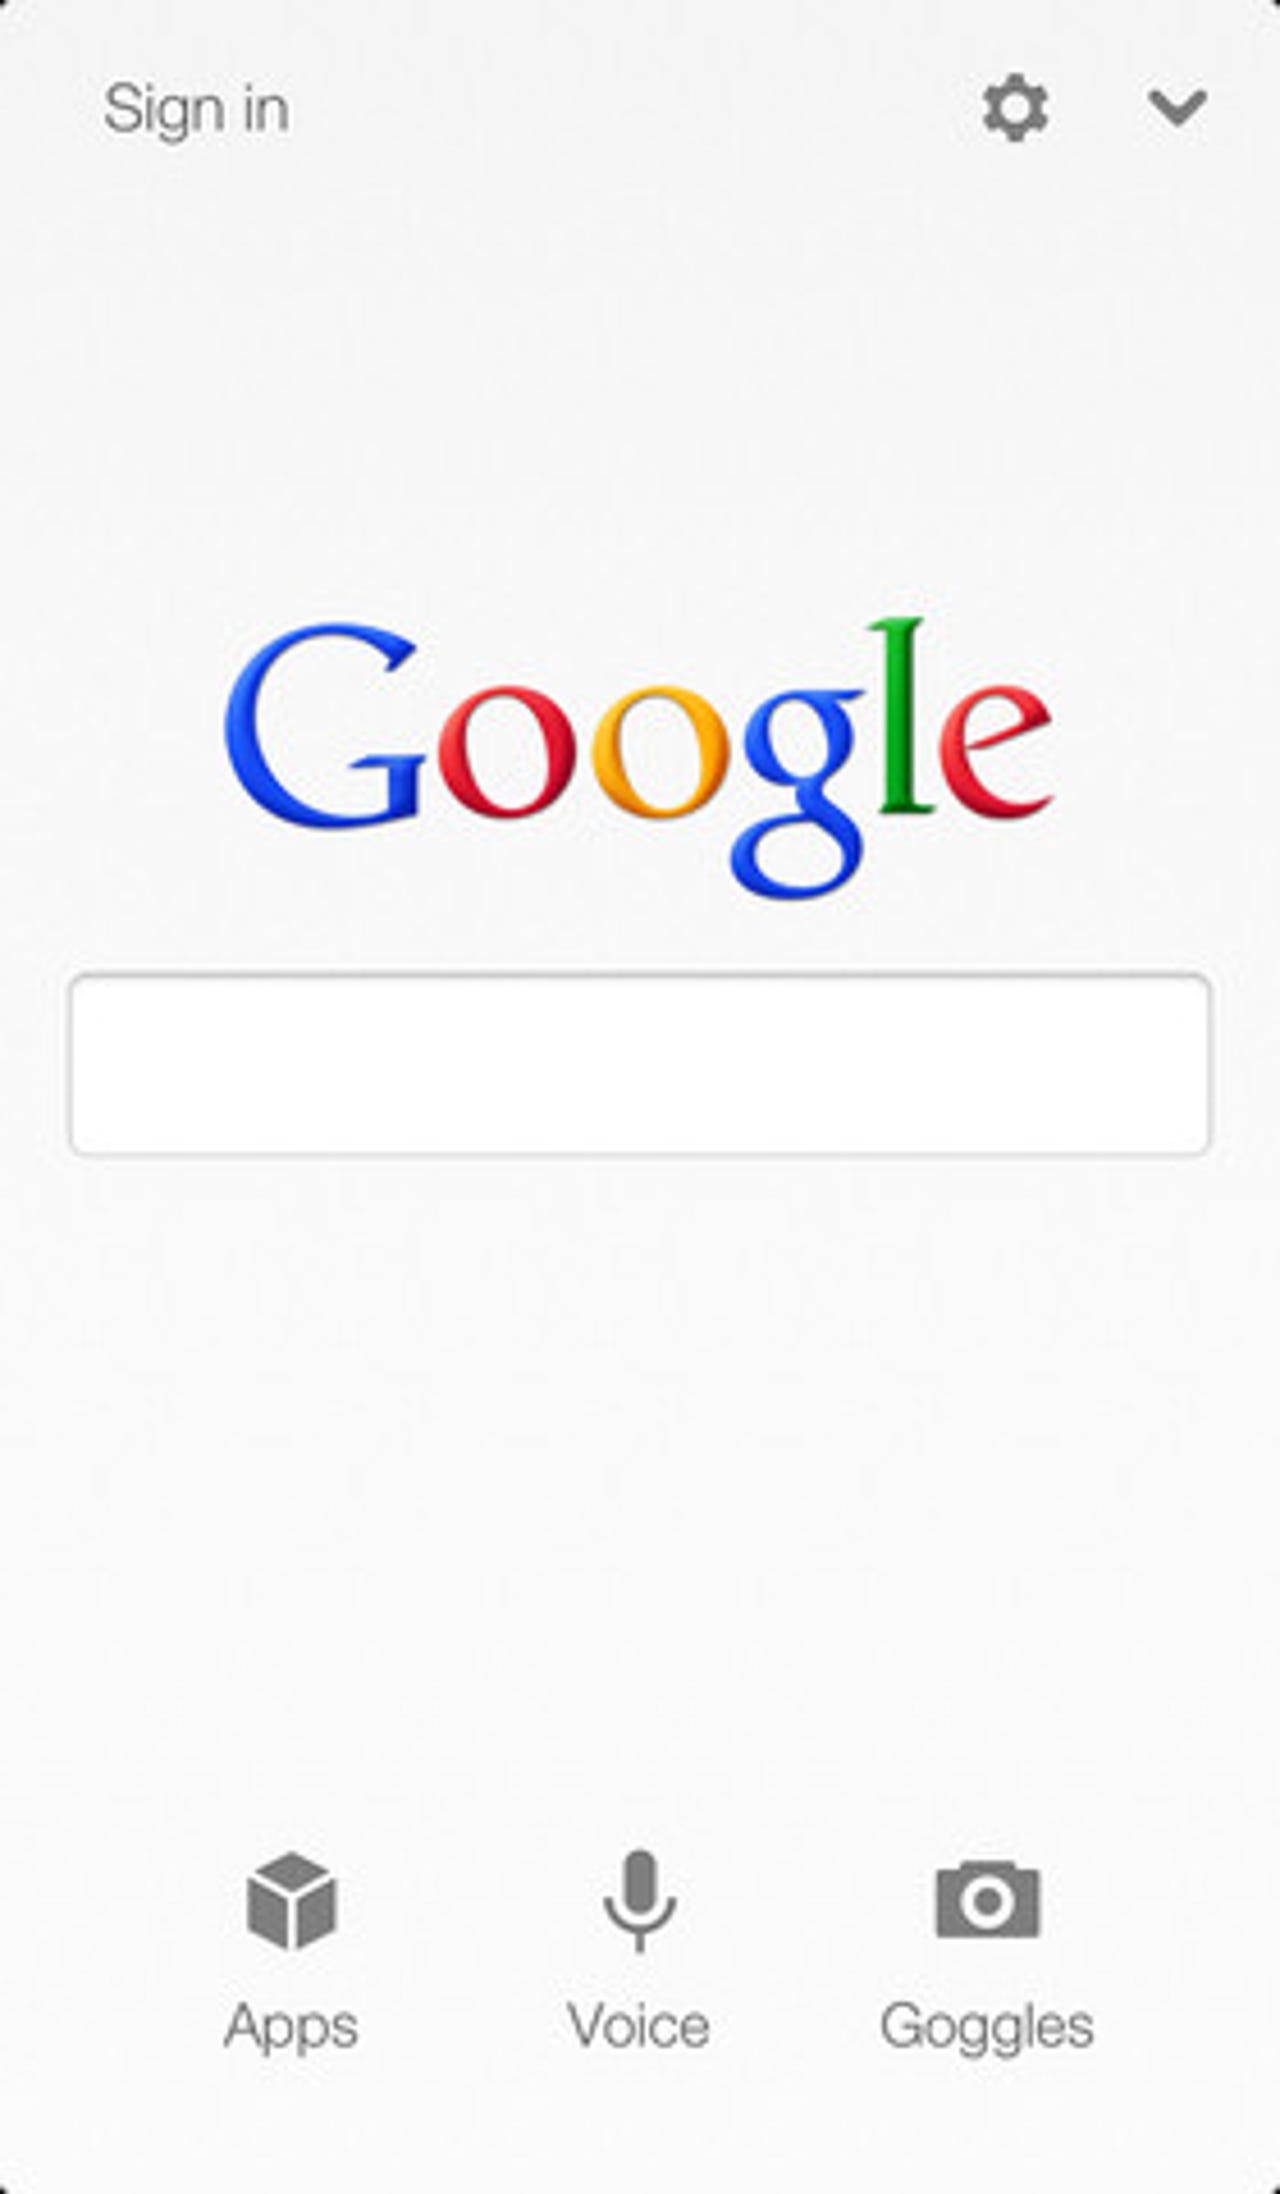 googlesearch.jpg